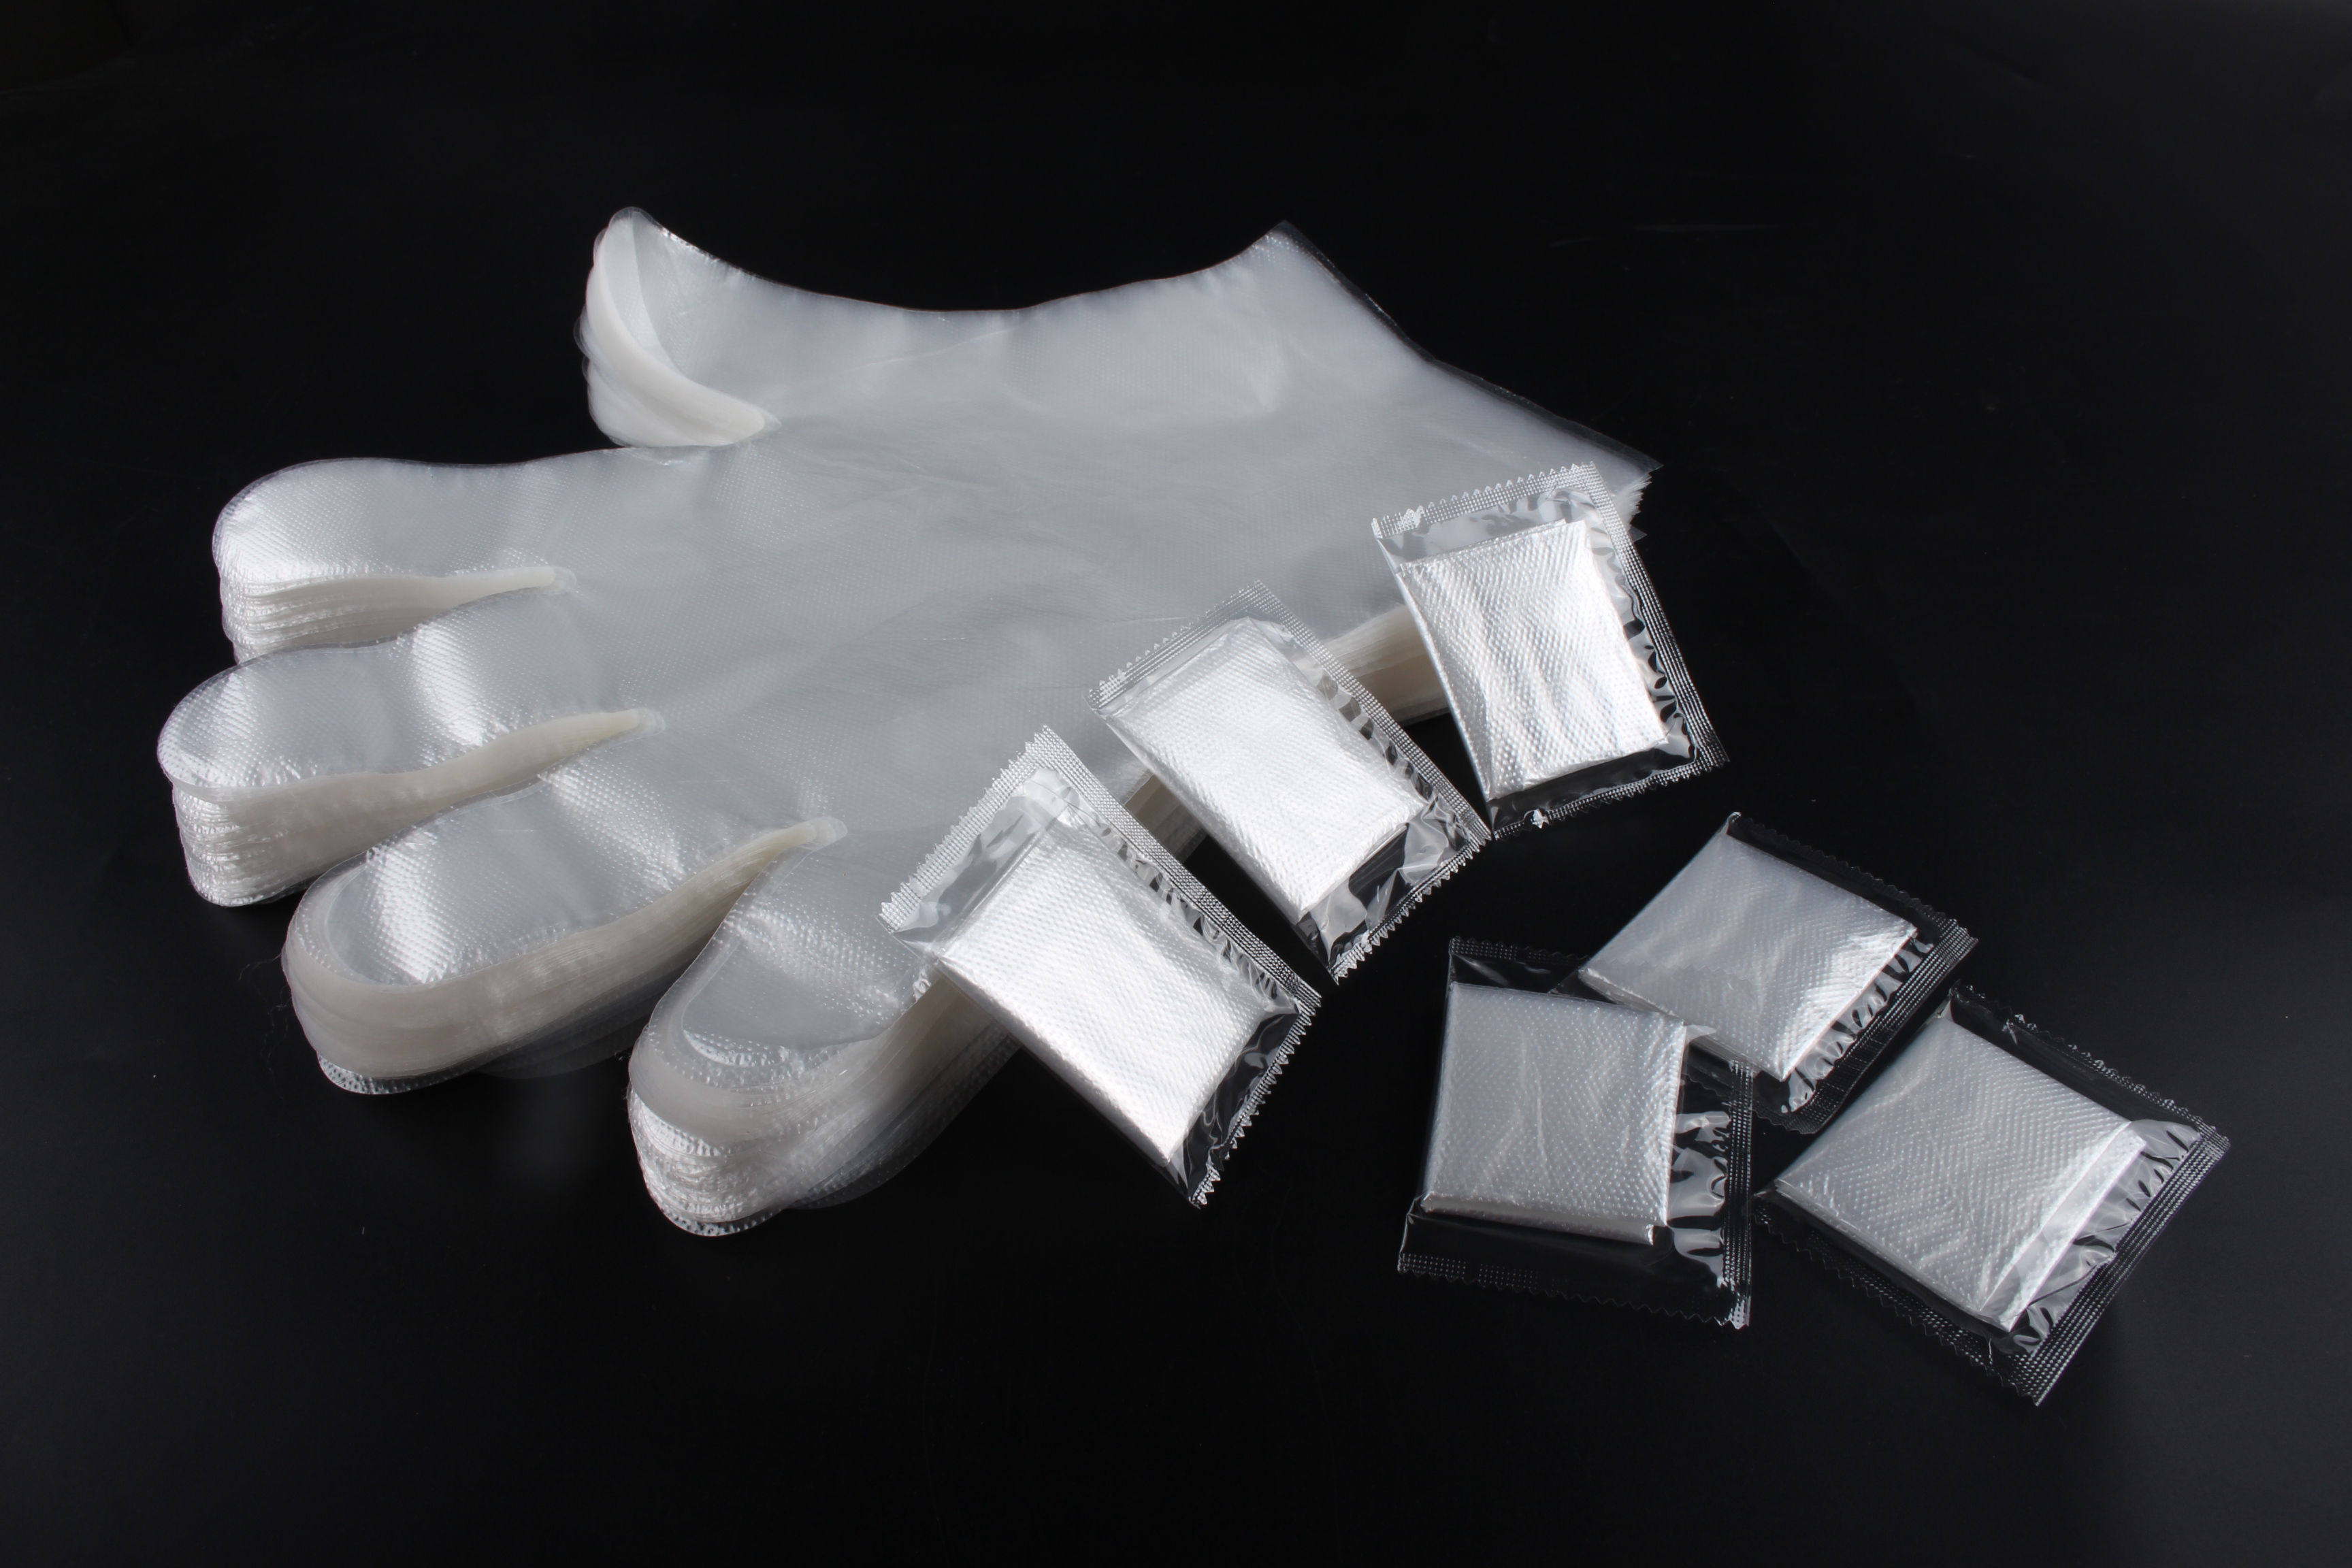 Bag Packaging Compostable Disposable Gloves For Kids